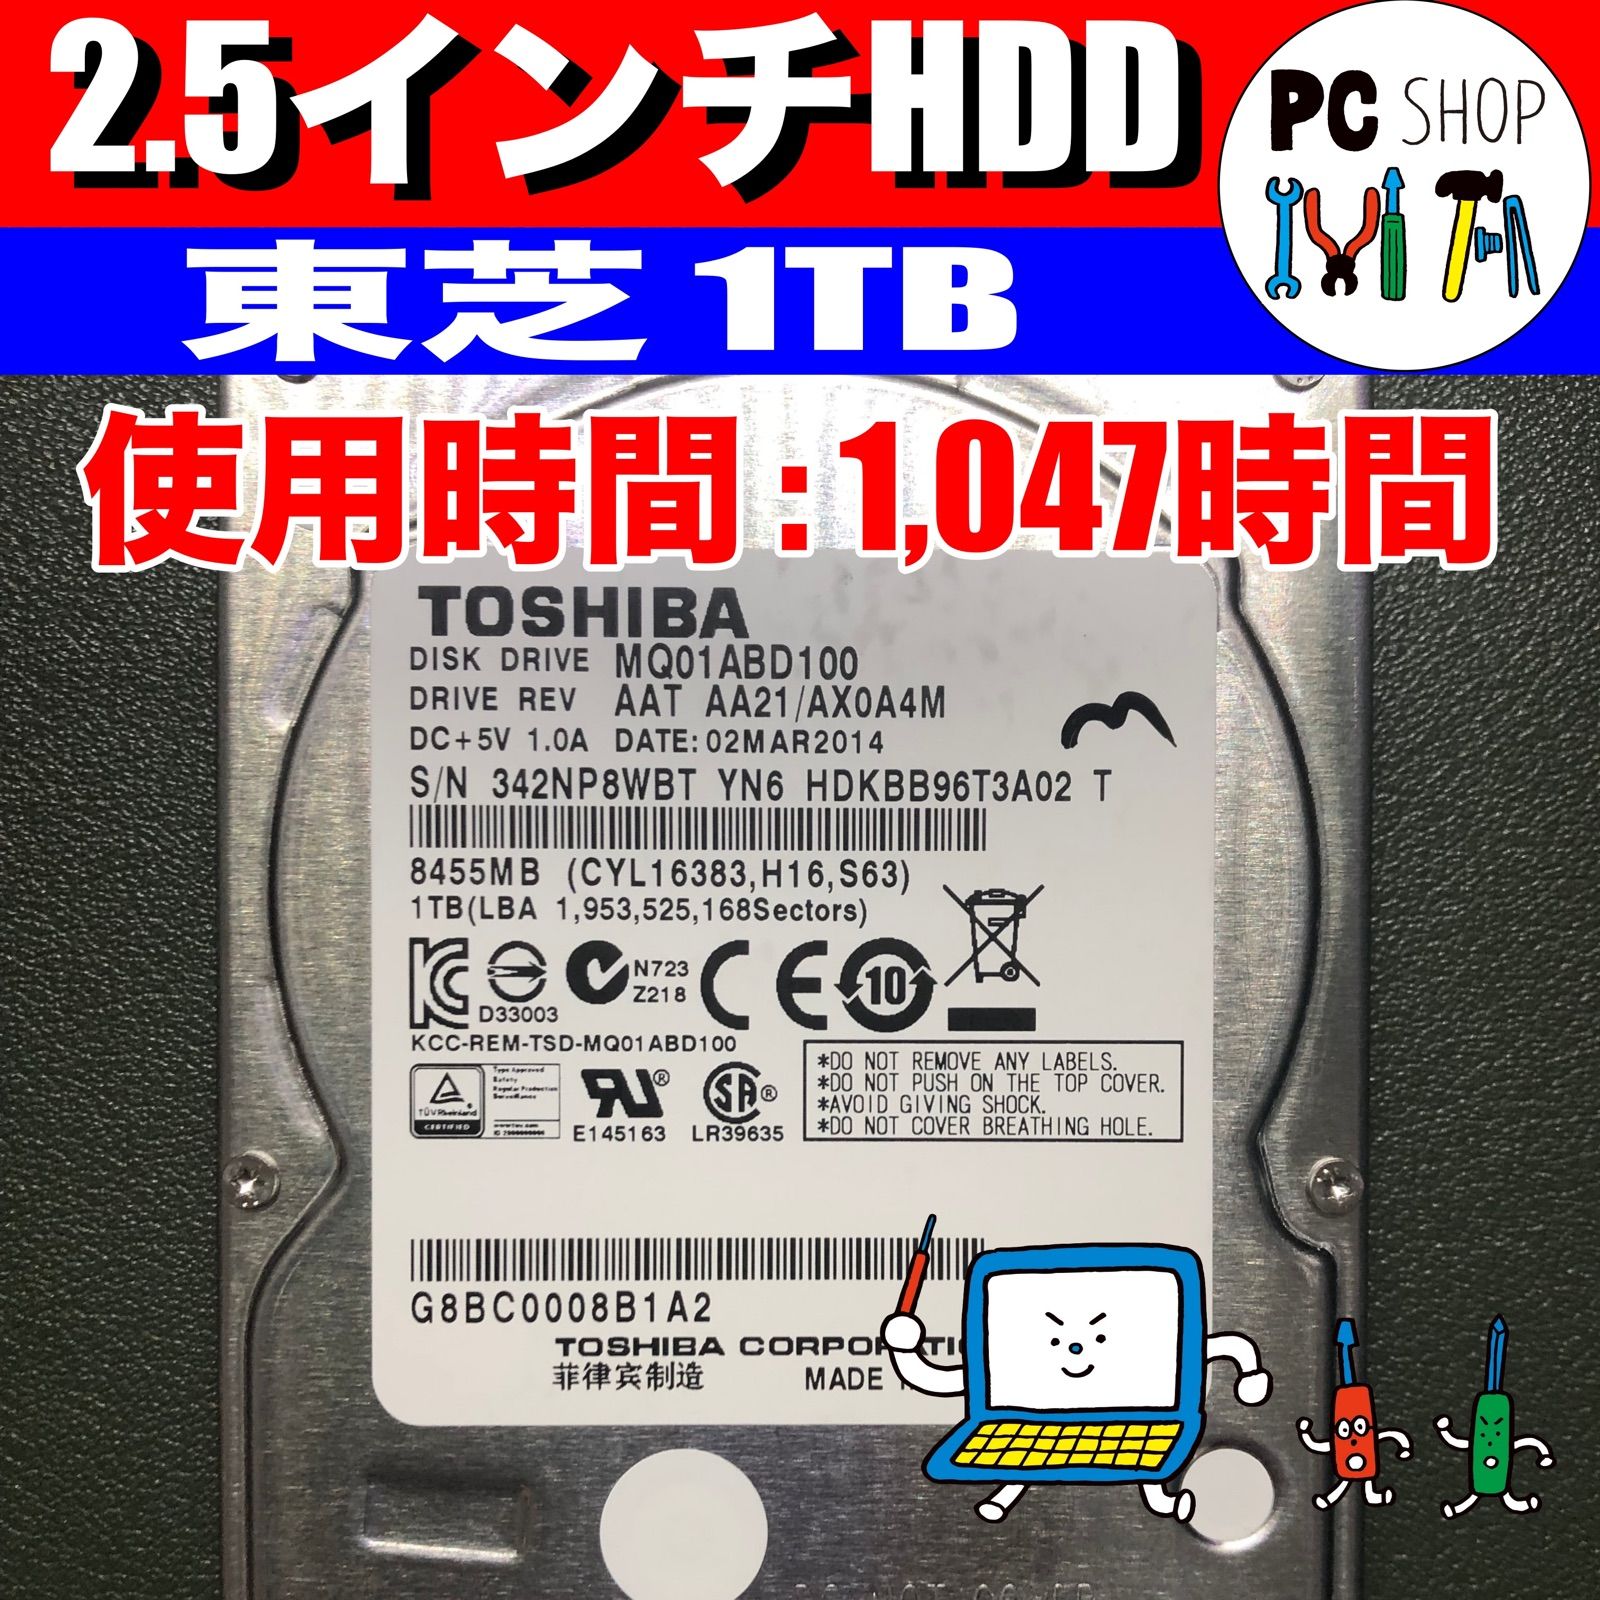 TOSHIBA製 内蔵ハードディスク HDD 1TB 2.5インチ SATA MQ01ABD100 5400rpm 8MB 9.5mm厚 